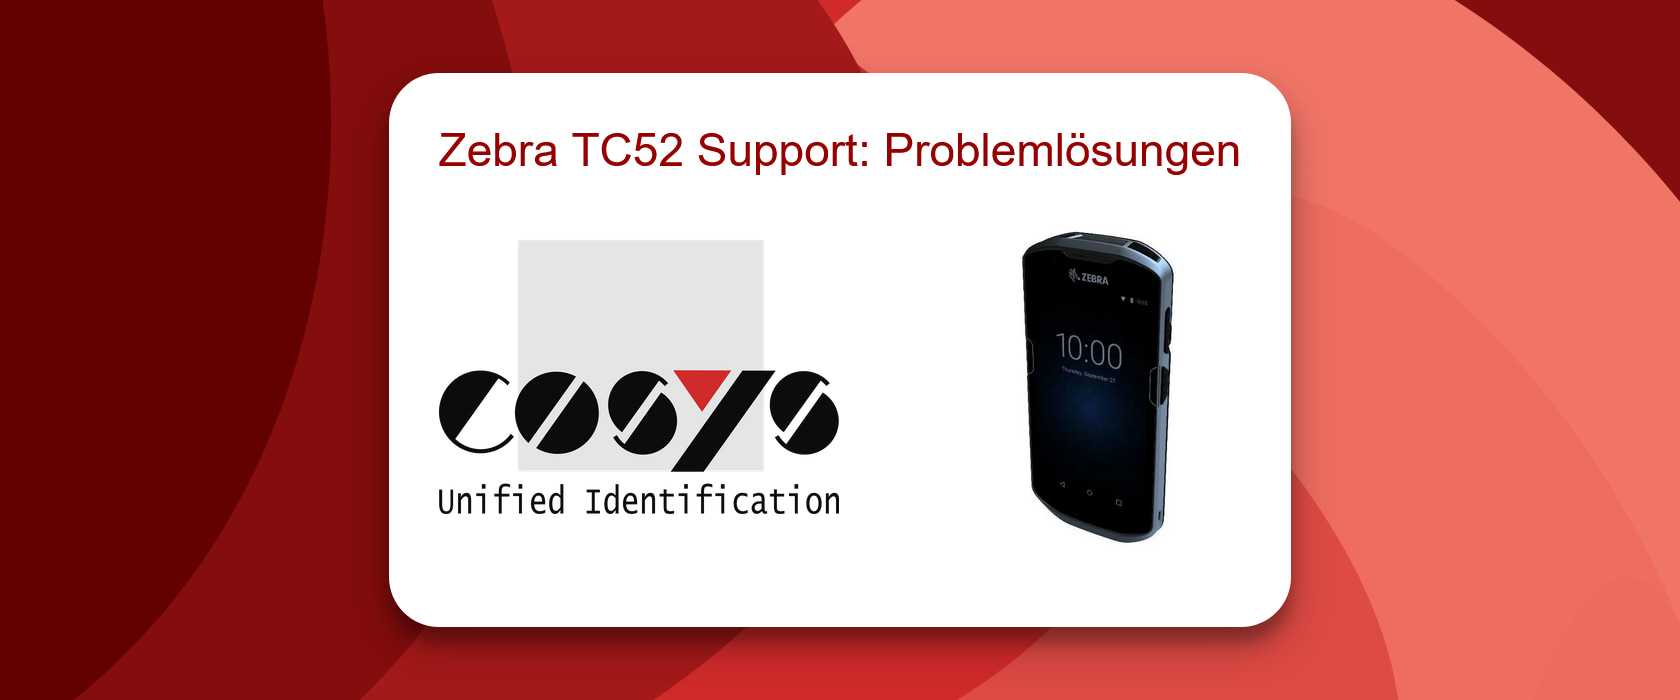 Zebra TC52 Support Services